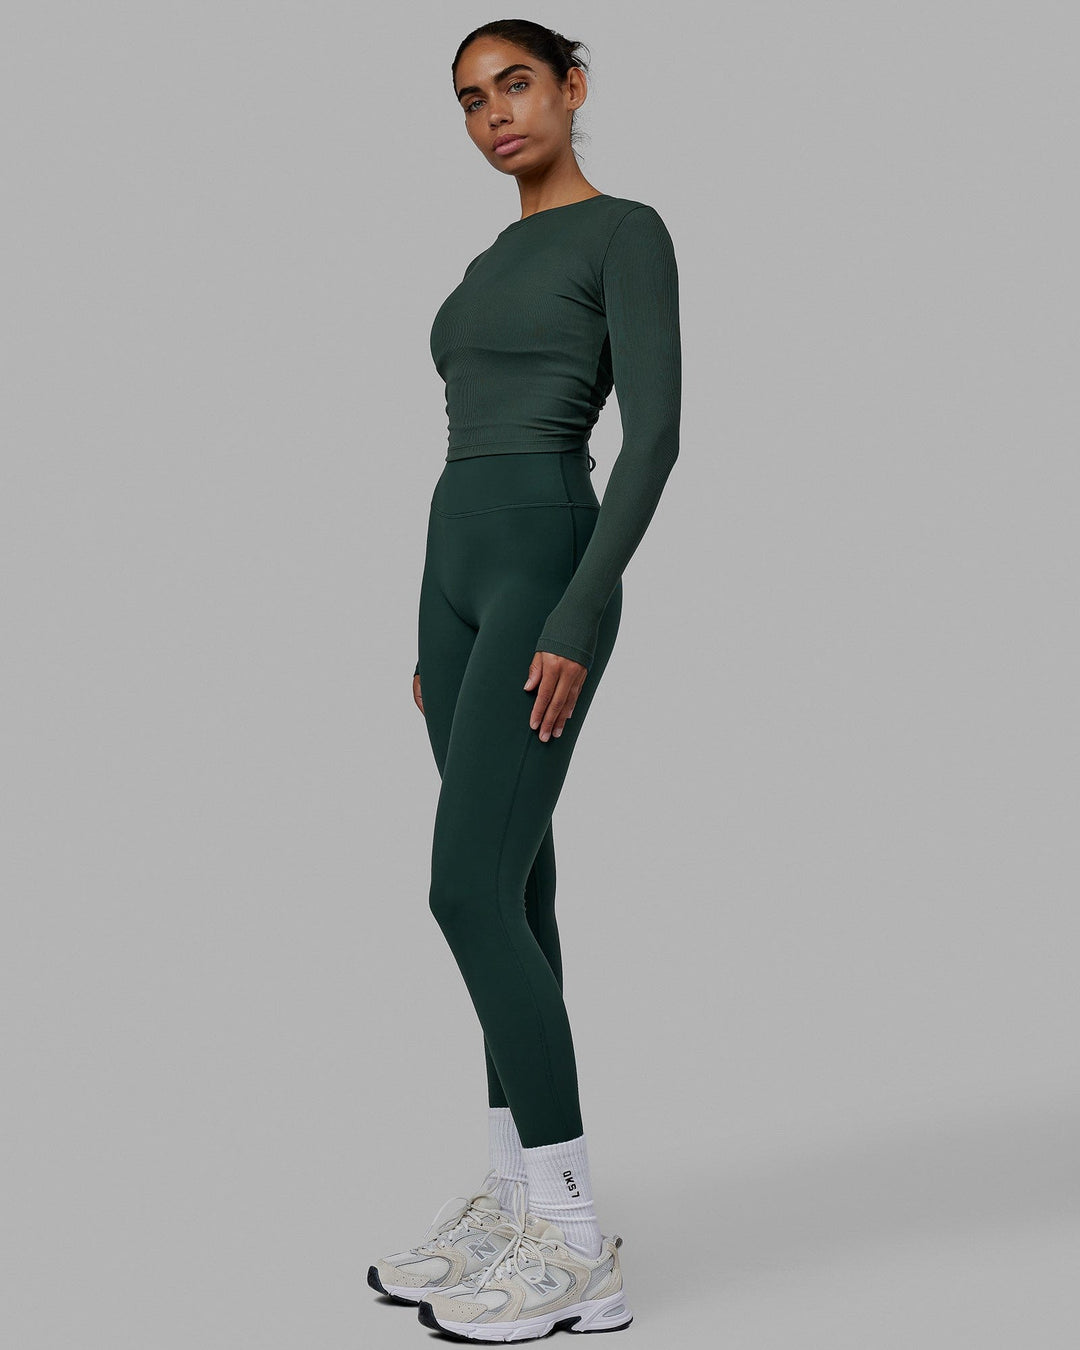 Woman wearing Kick On LS Tee - Vital Green